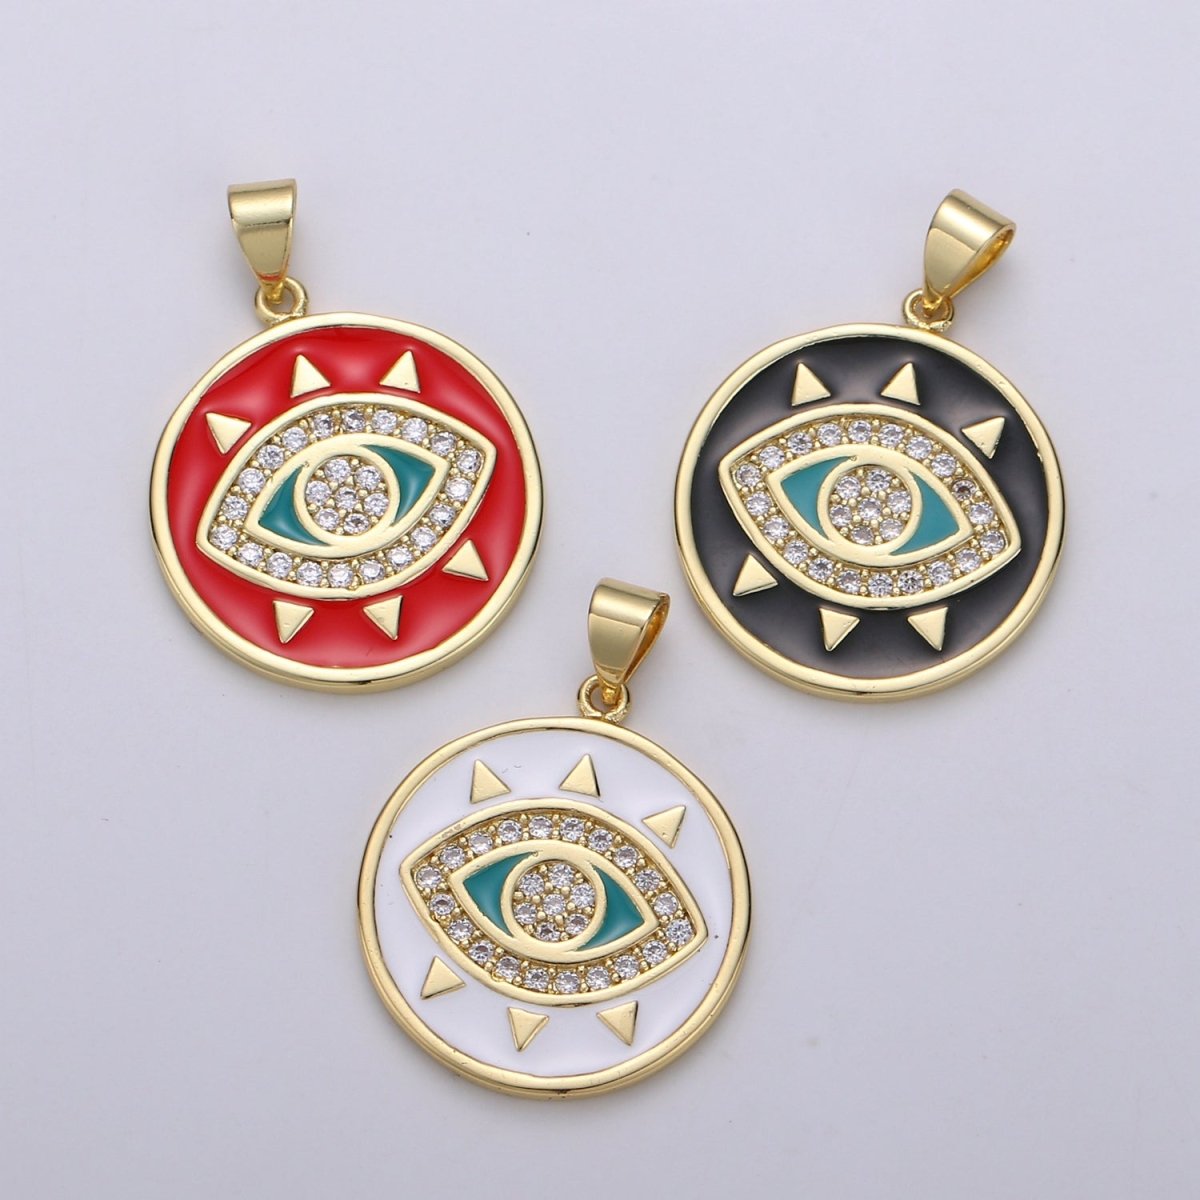 25x20mm Wholesale Gold-Filled Evil Eye Pendant Charm with Rhinestones, Red, Black, or White Options, Pendant for Necklace Bracelet Anklet Making J-135~J-137 - DLUXCA